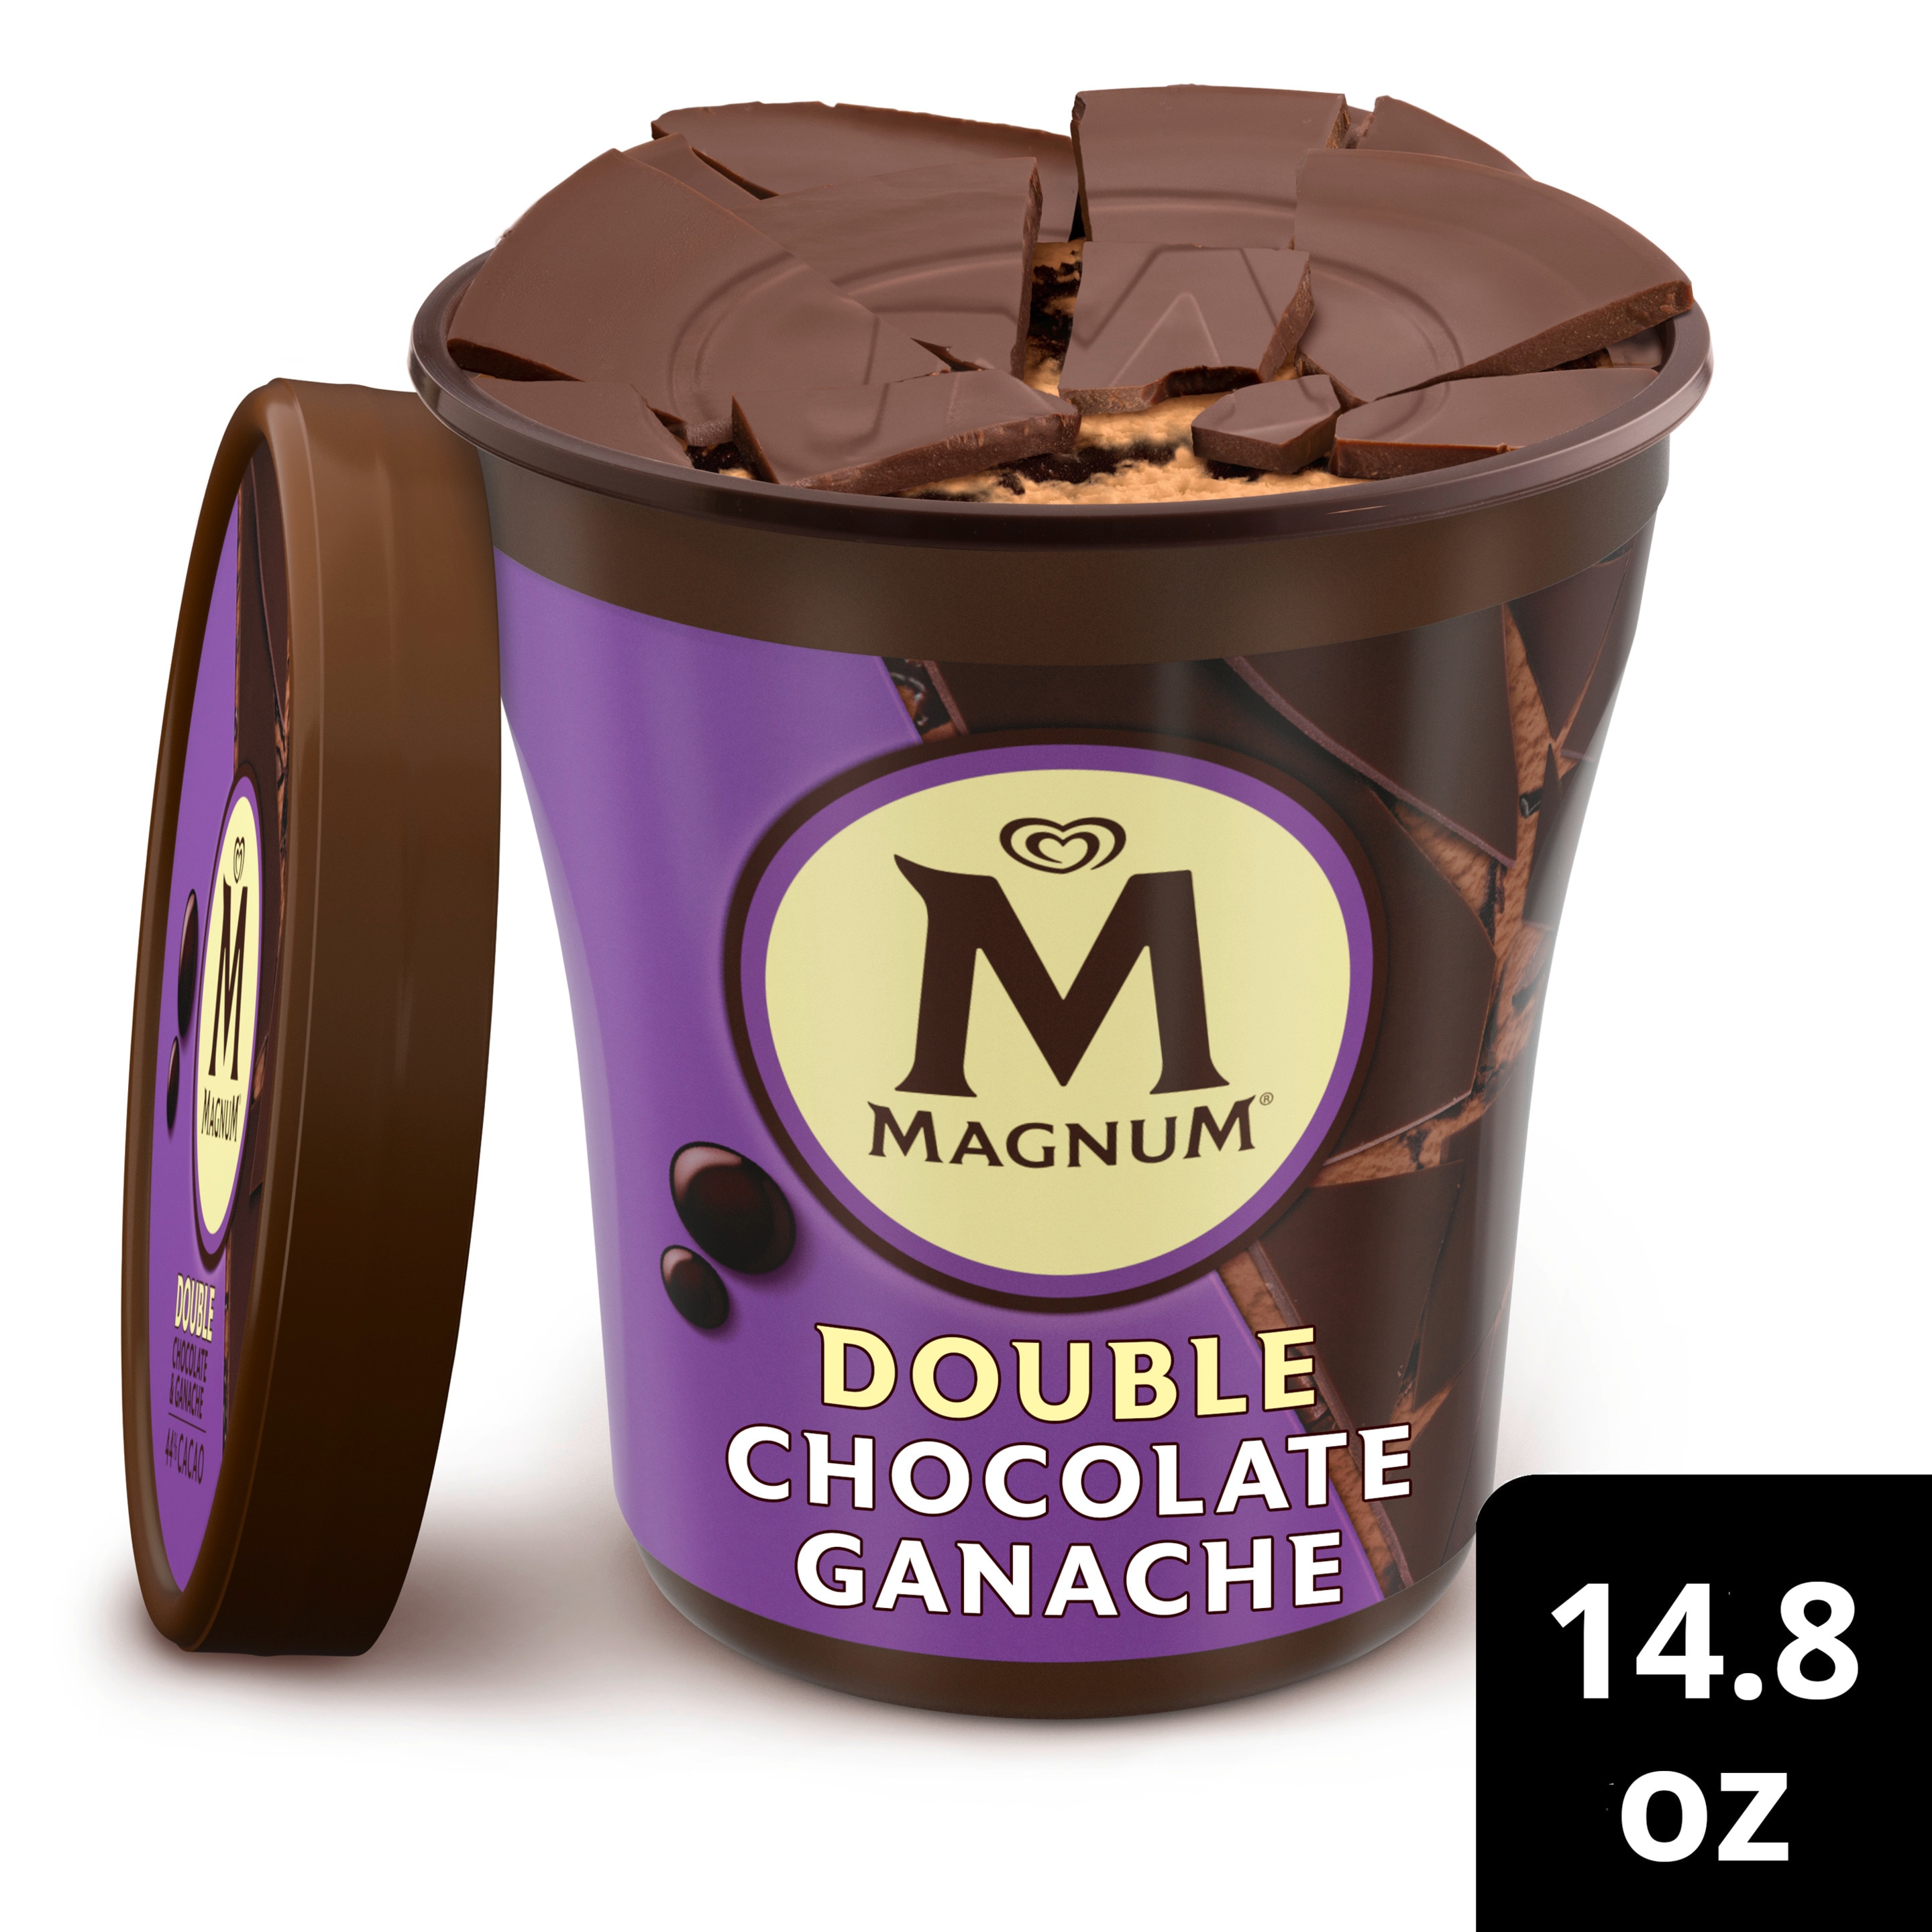 Double Chocolate and Ganache Ice Cream Tub